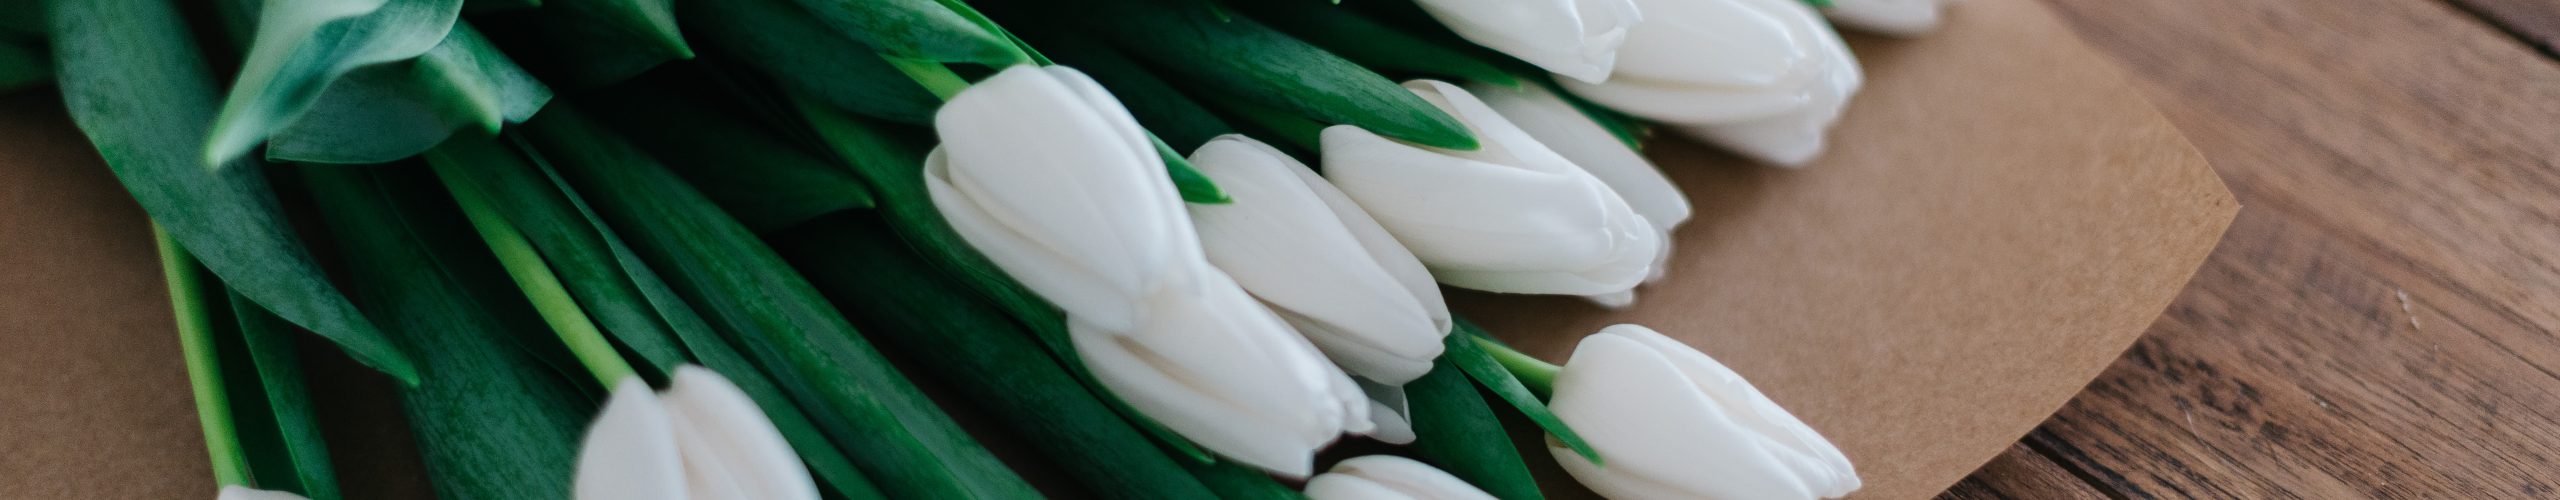 White Tulips, Photo by Roman Kraft on Unsplash